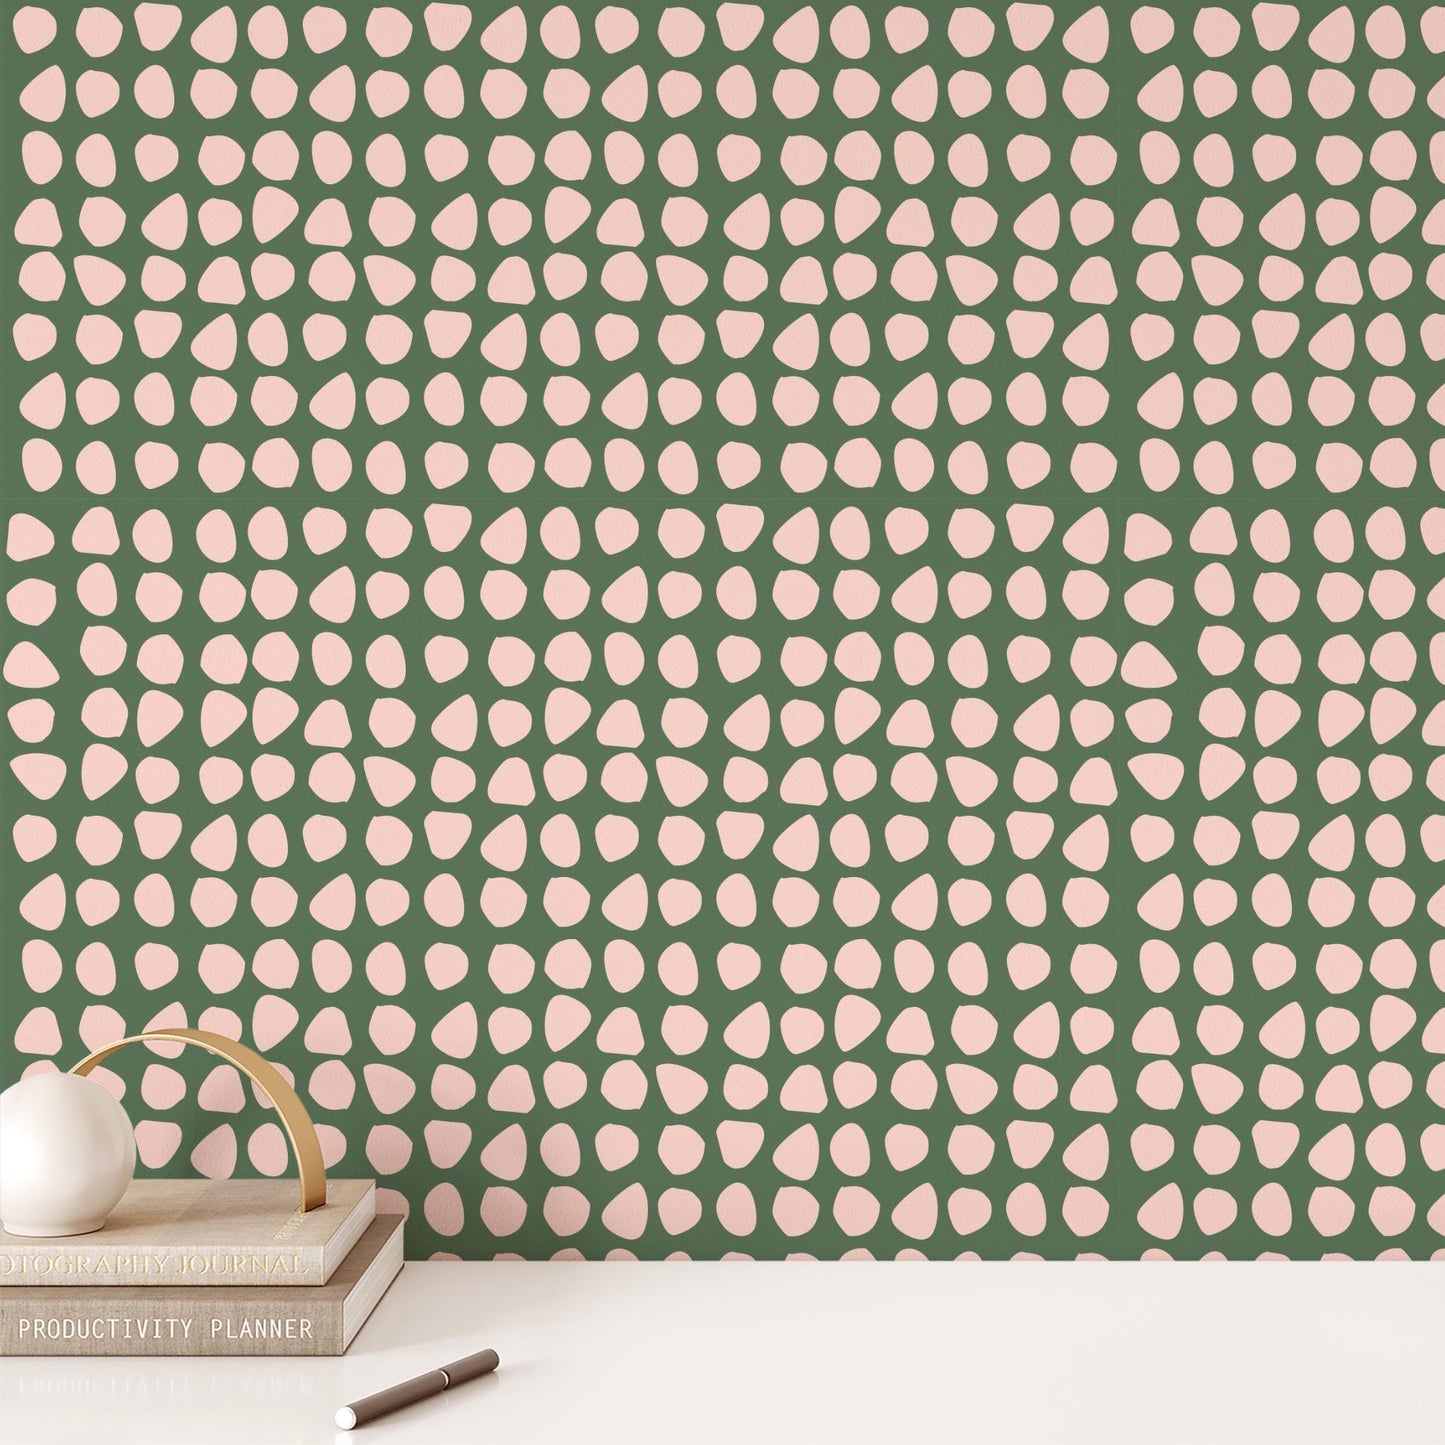 Office preview of Organic Dots Wallpaper in Green by artist Brenda Bird